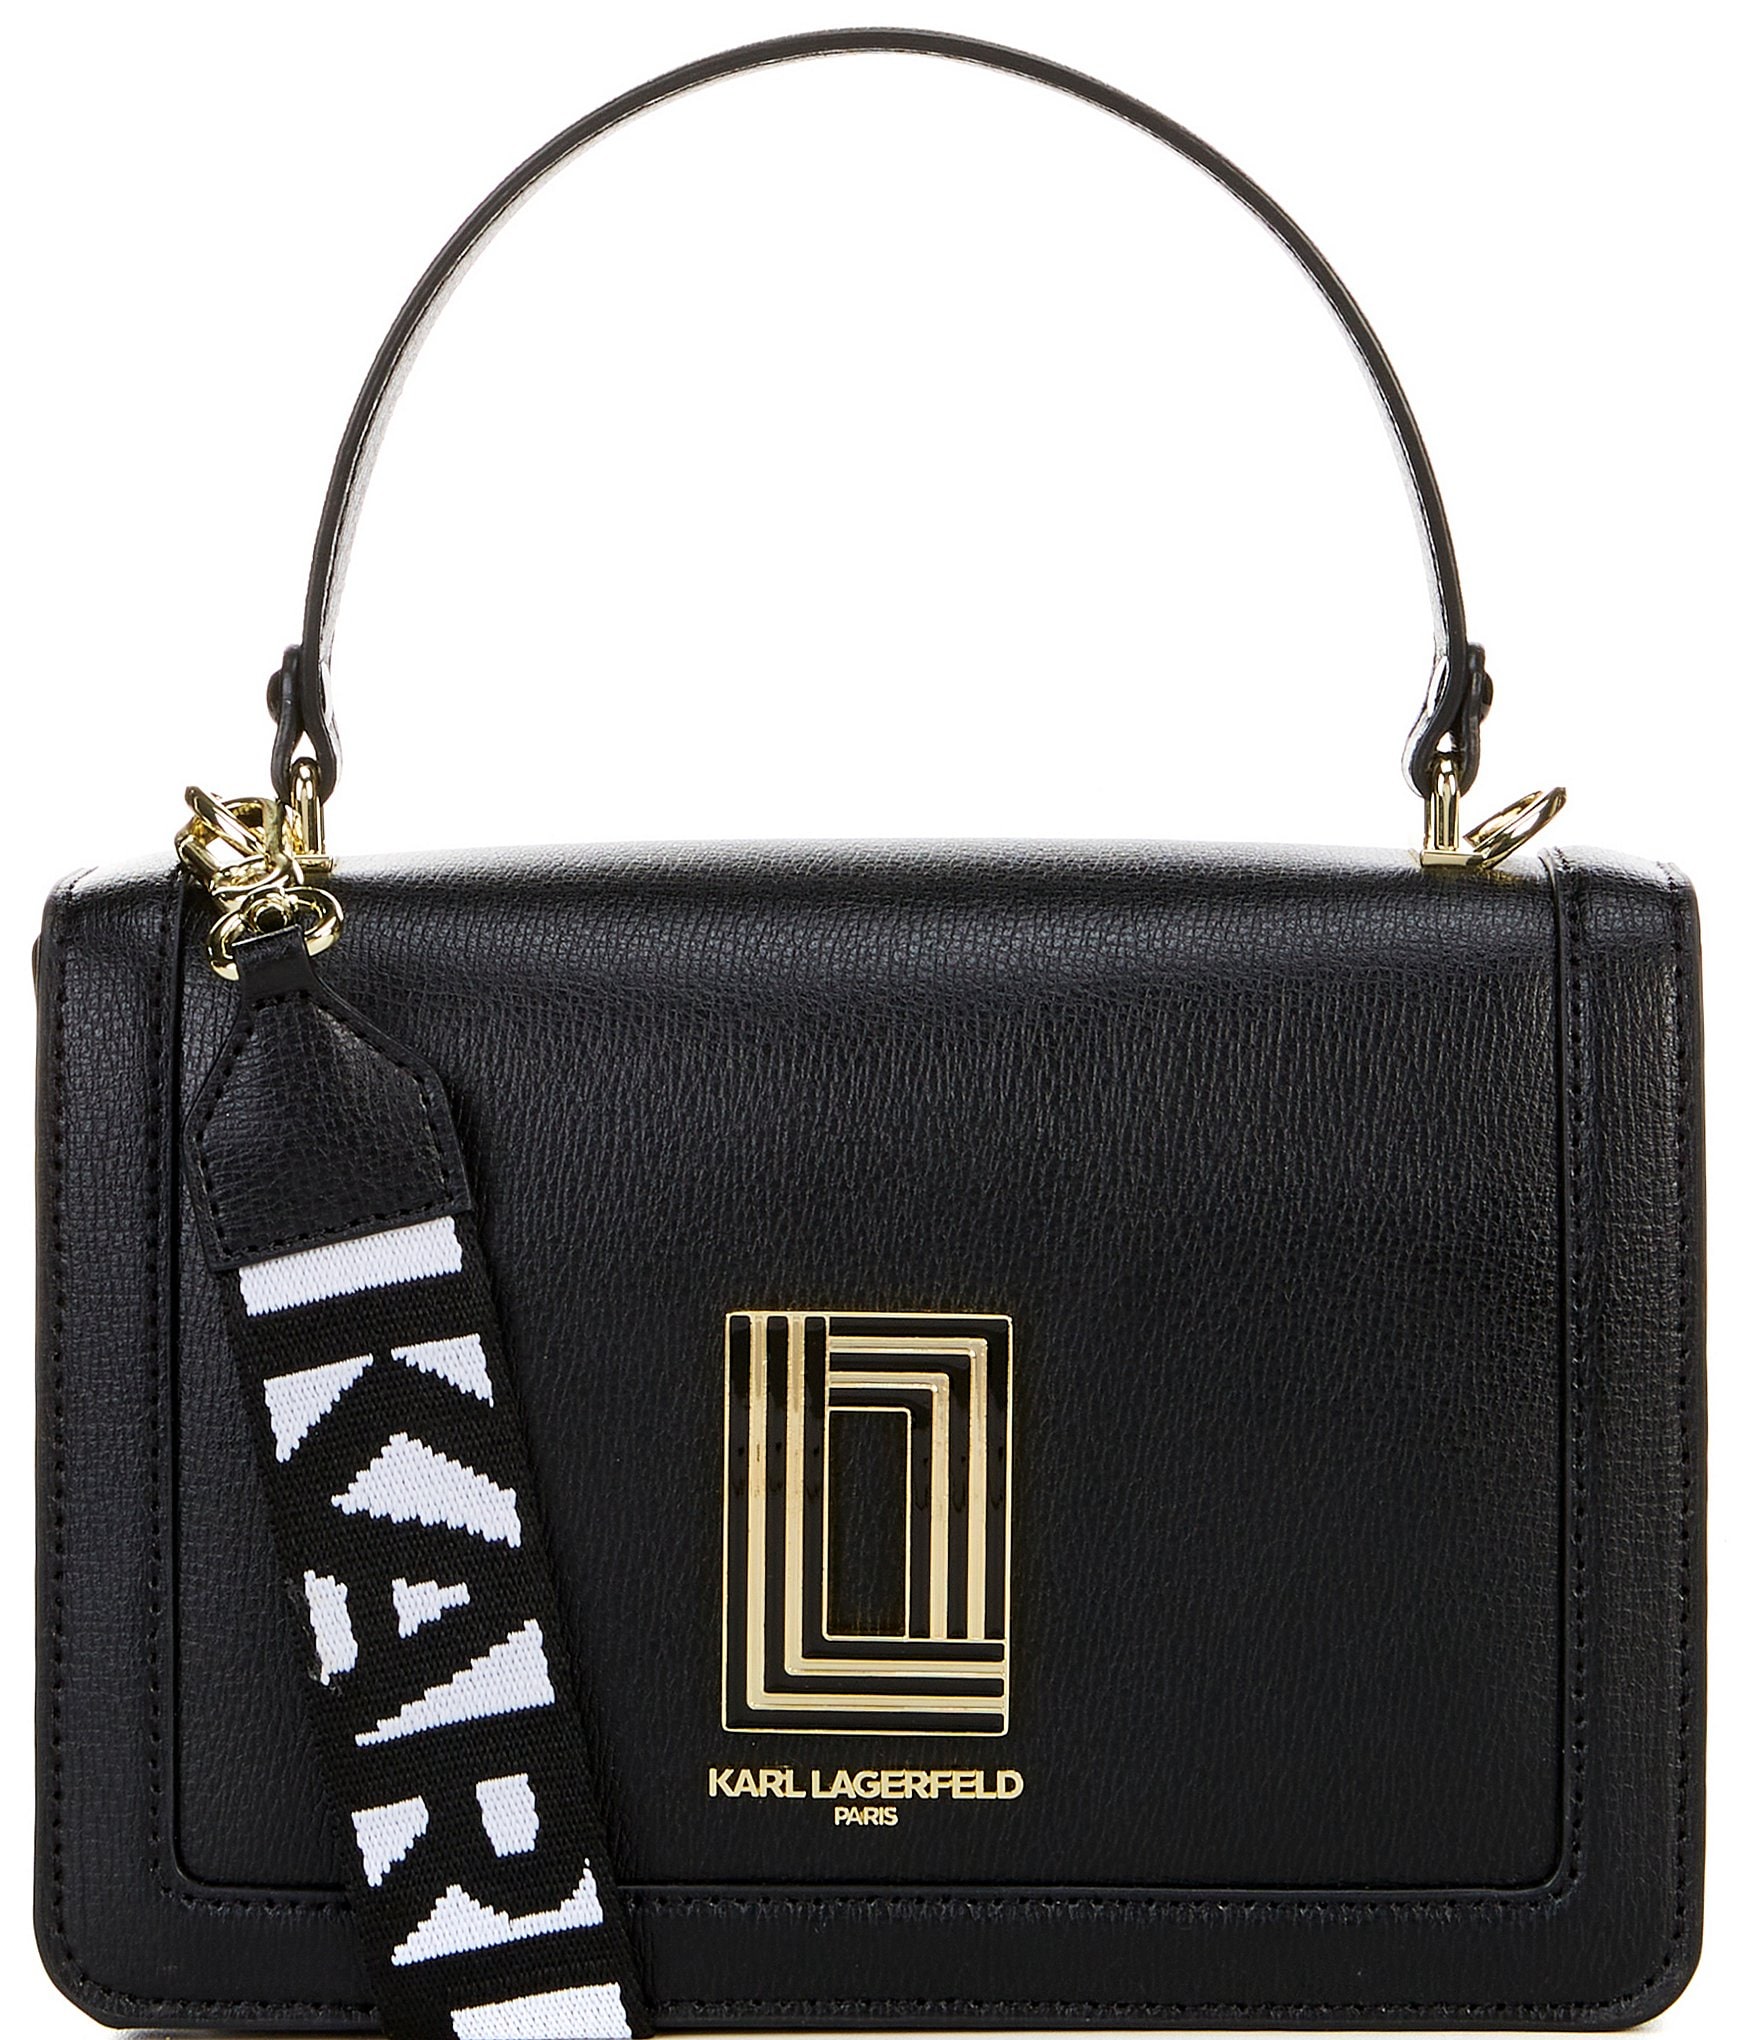 Authentic Vintage Karl Lagerfeld Black Leather Shoulder Chain Bag - Etsy